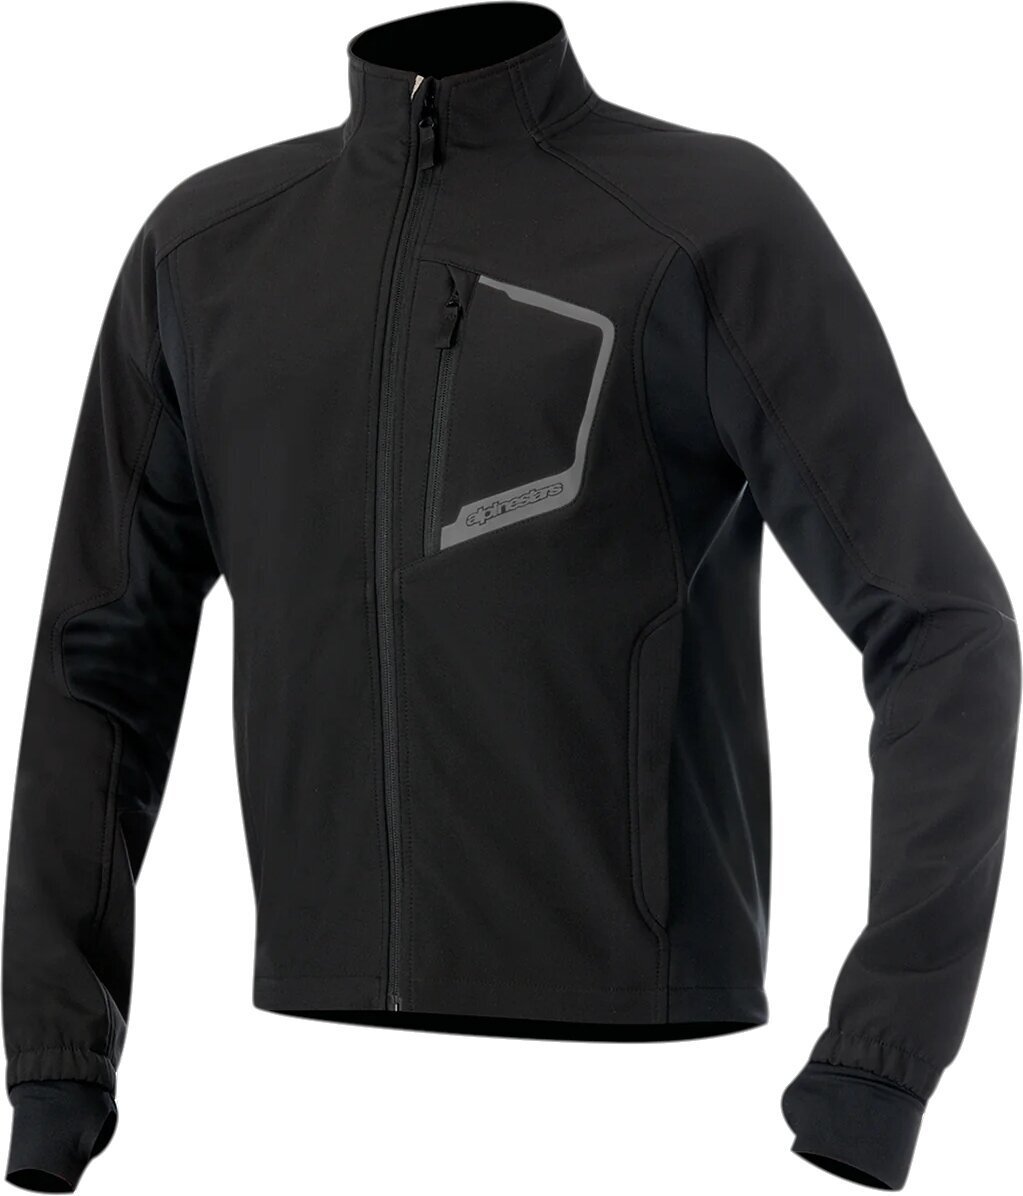 Chaqueta textil Alpinestars Tech Layer Top Black Black L Chaqueta textil